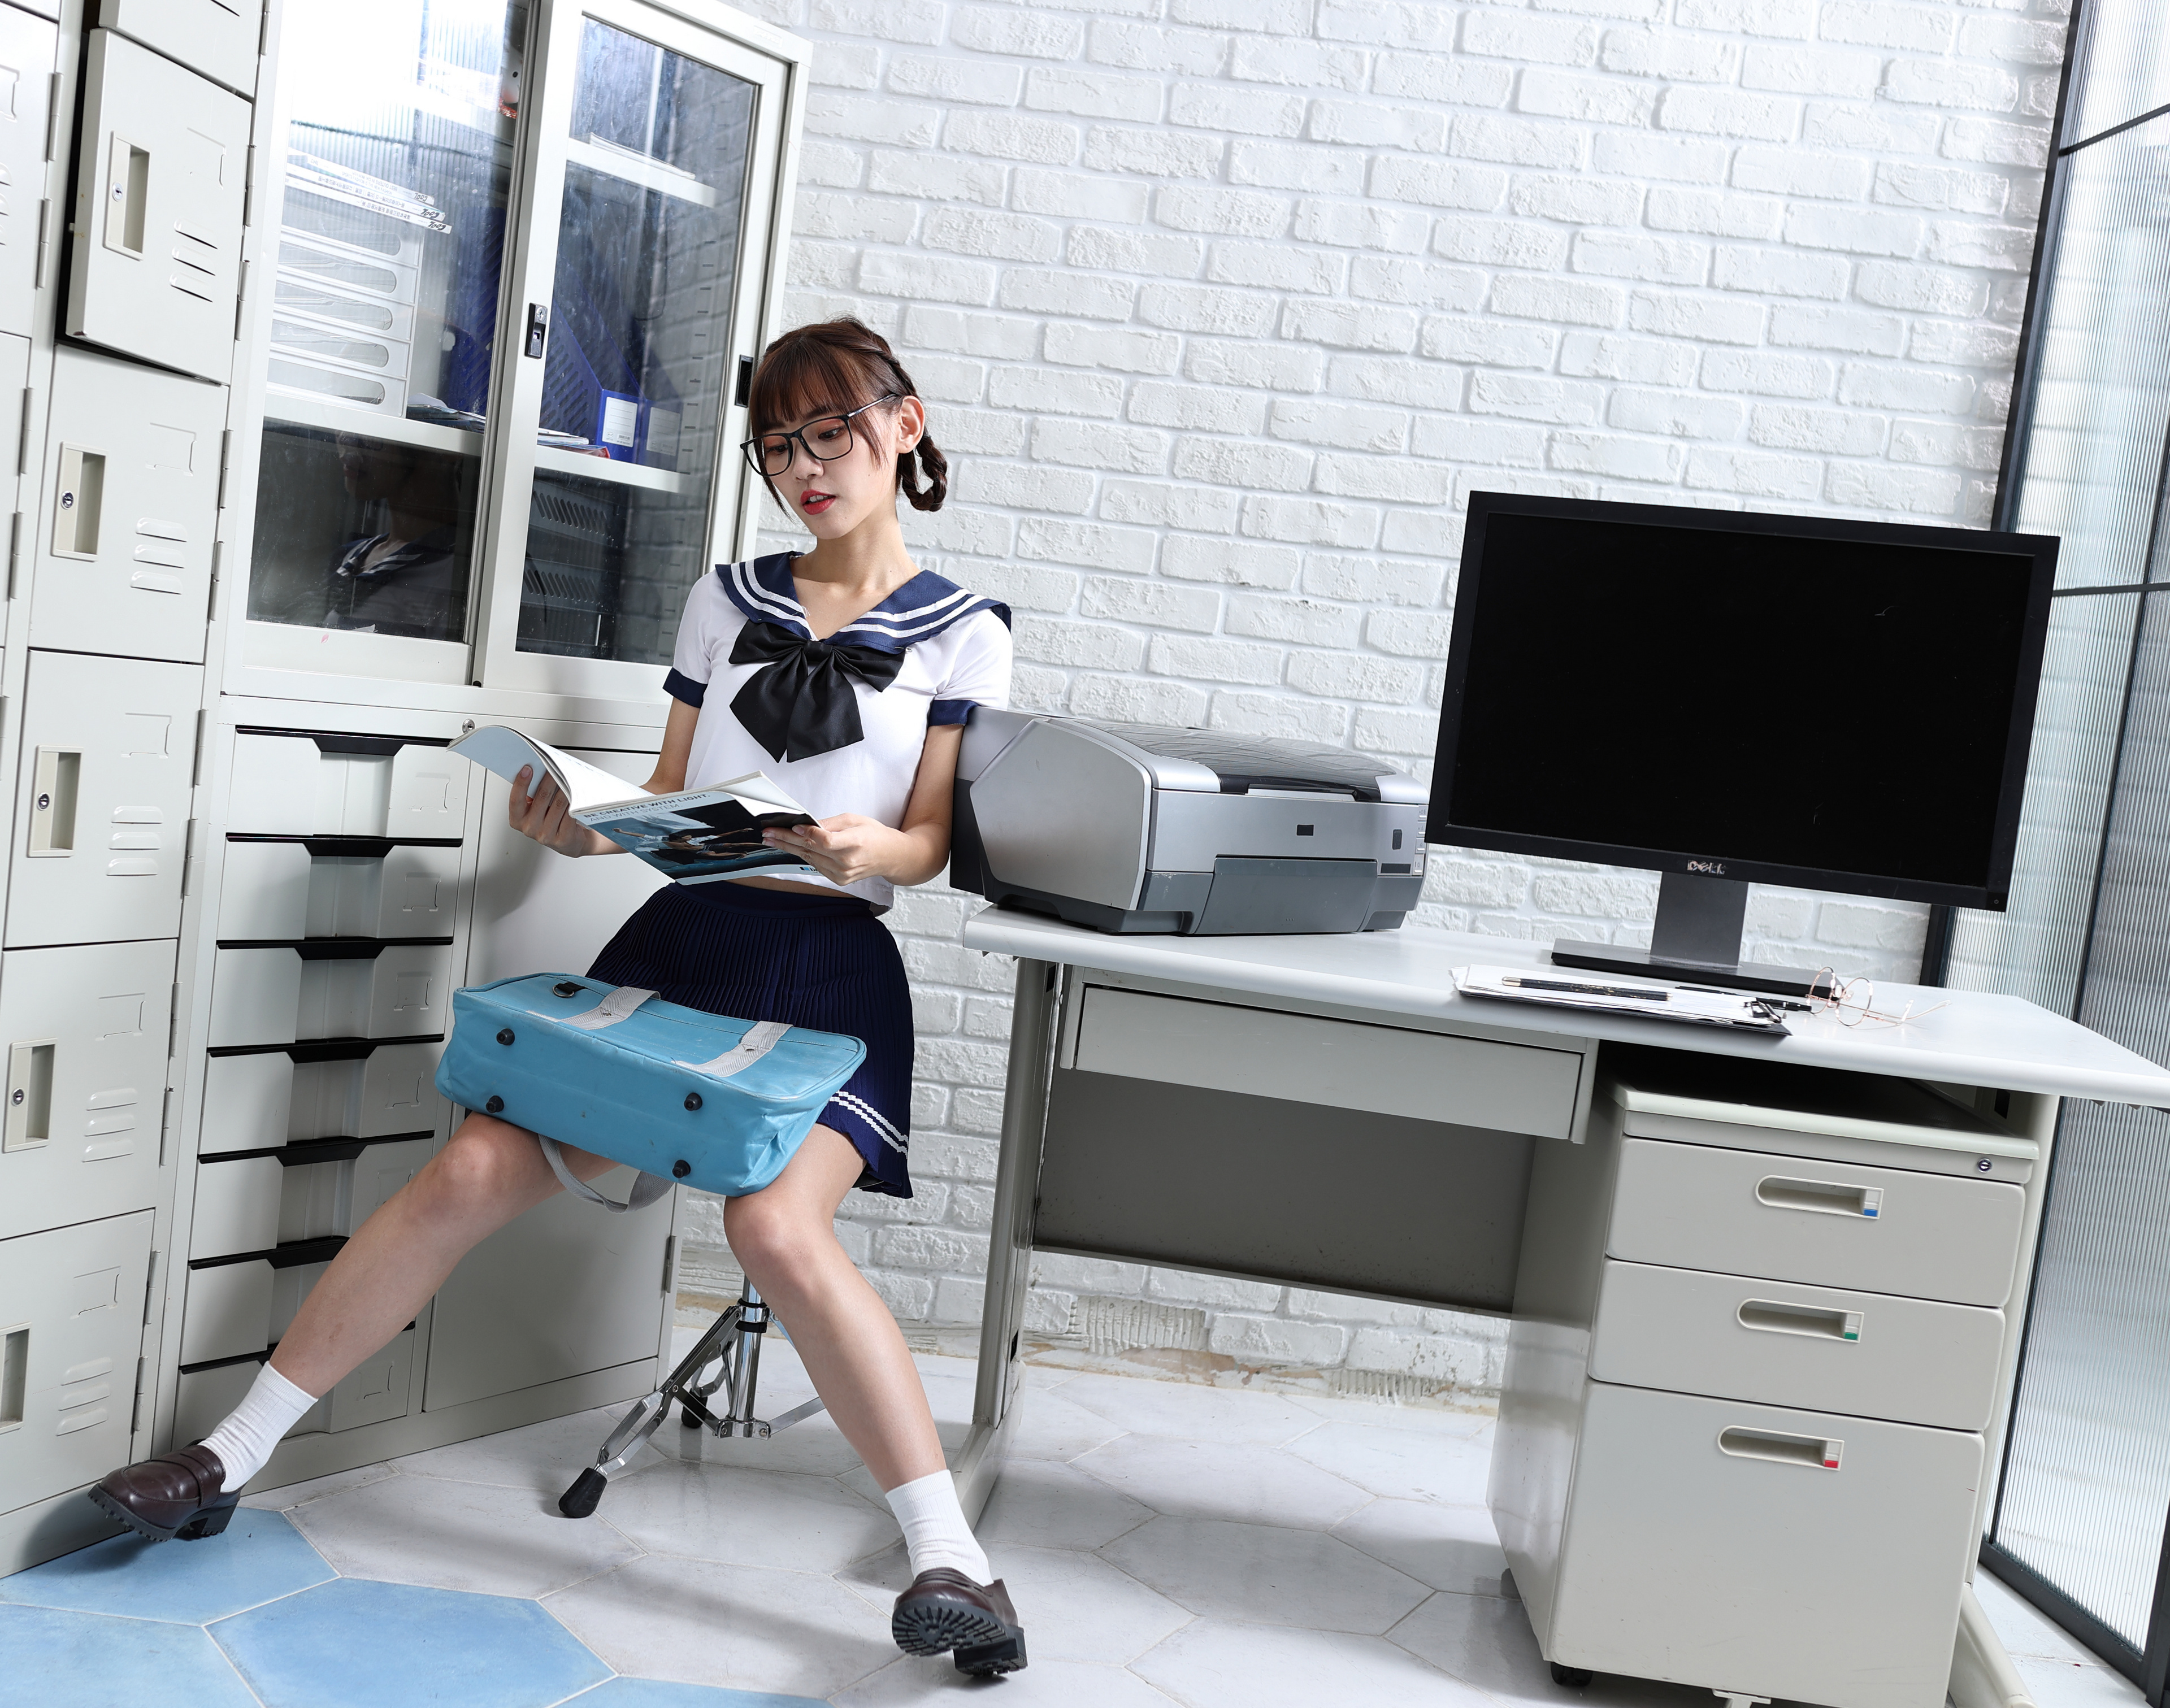 Asian Model Women Long Hair Dark Hair Sitting School Uniform Printer Monitor 3840x3023